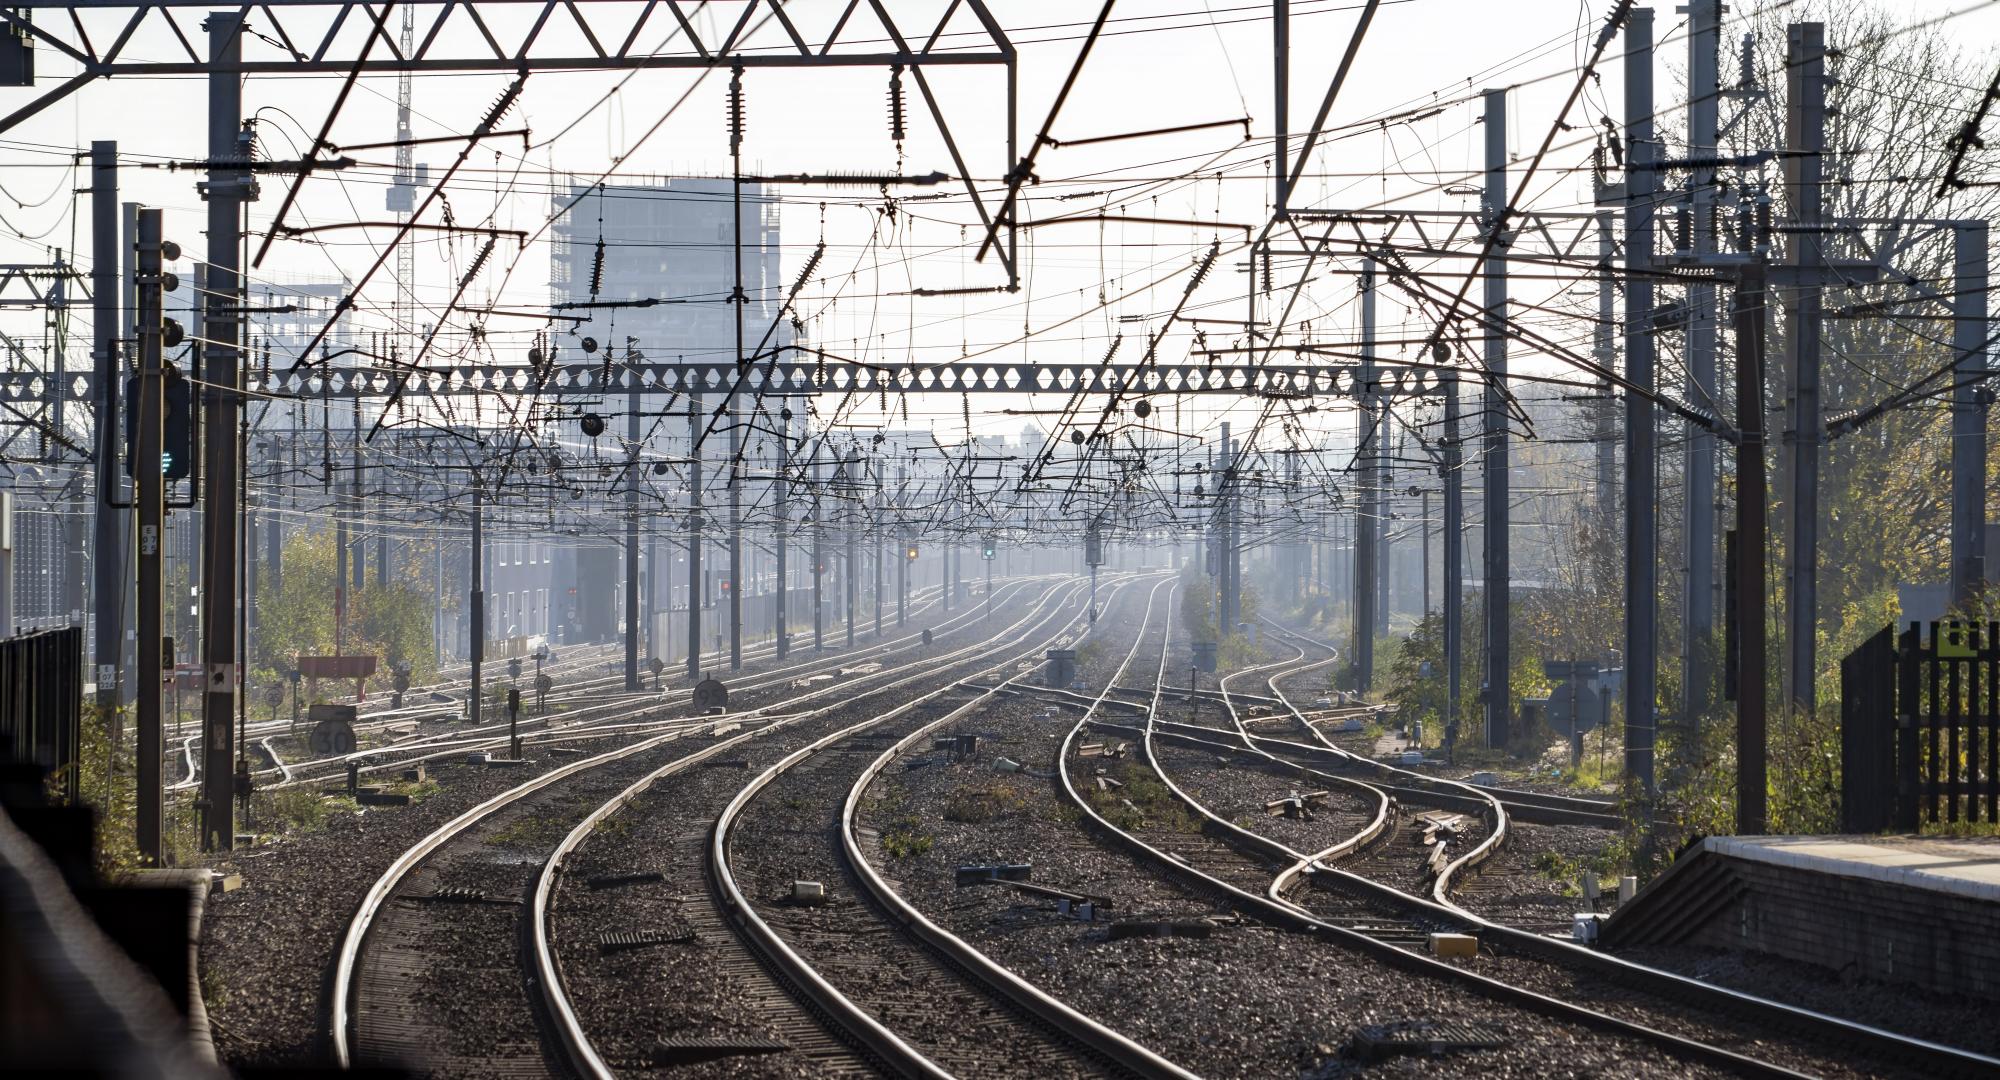 Electrified rail lines